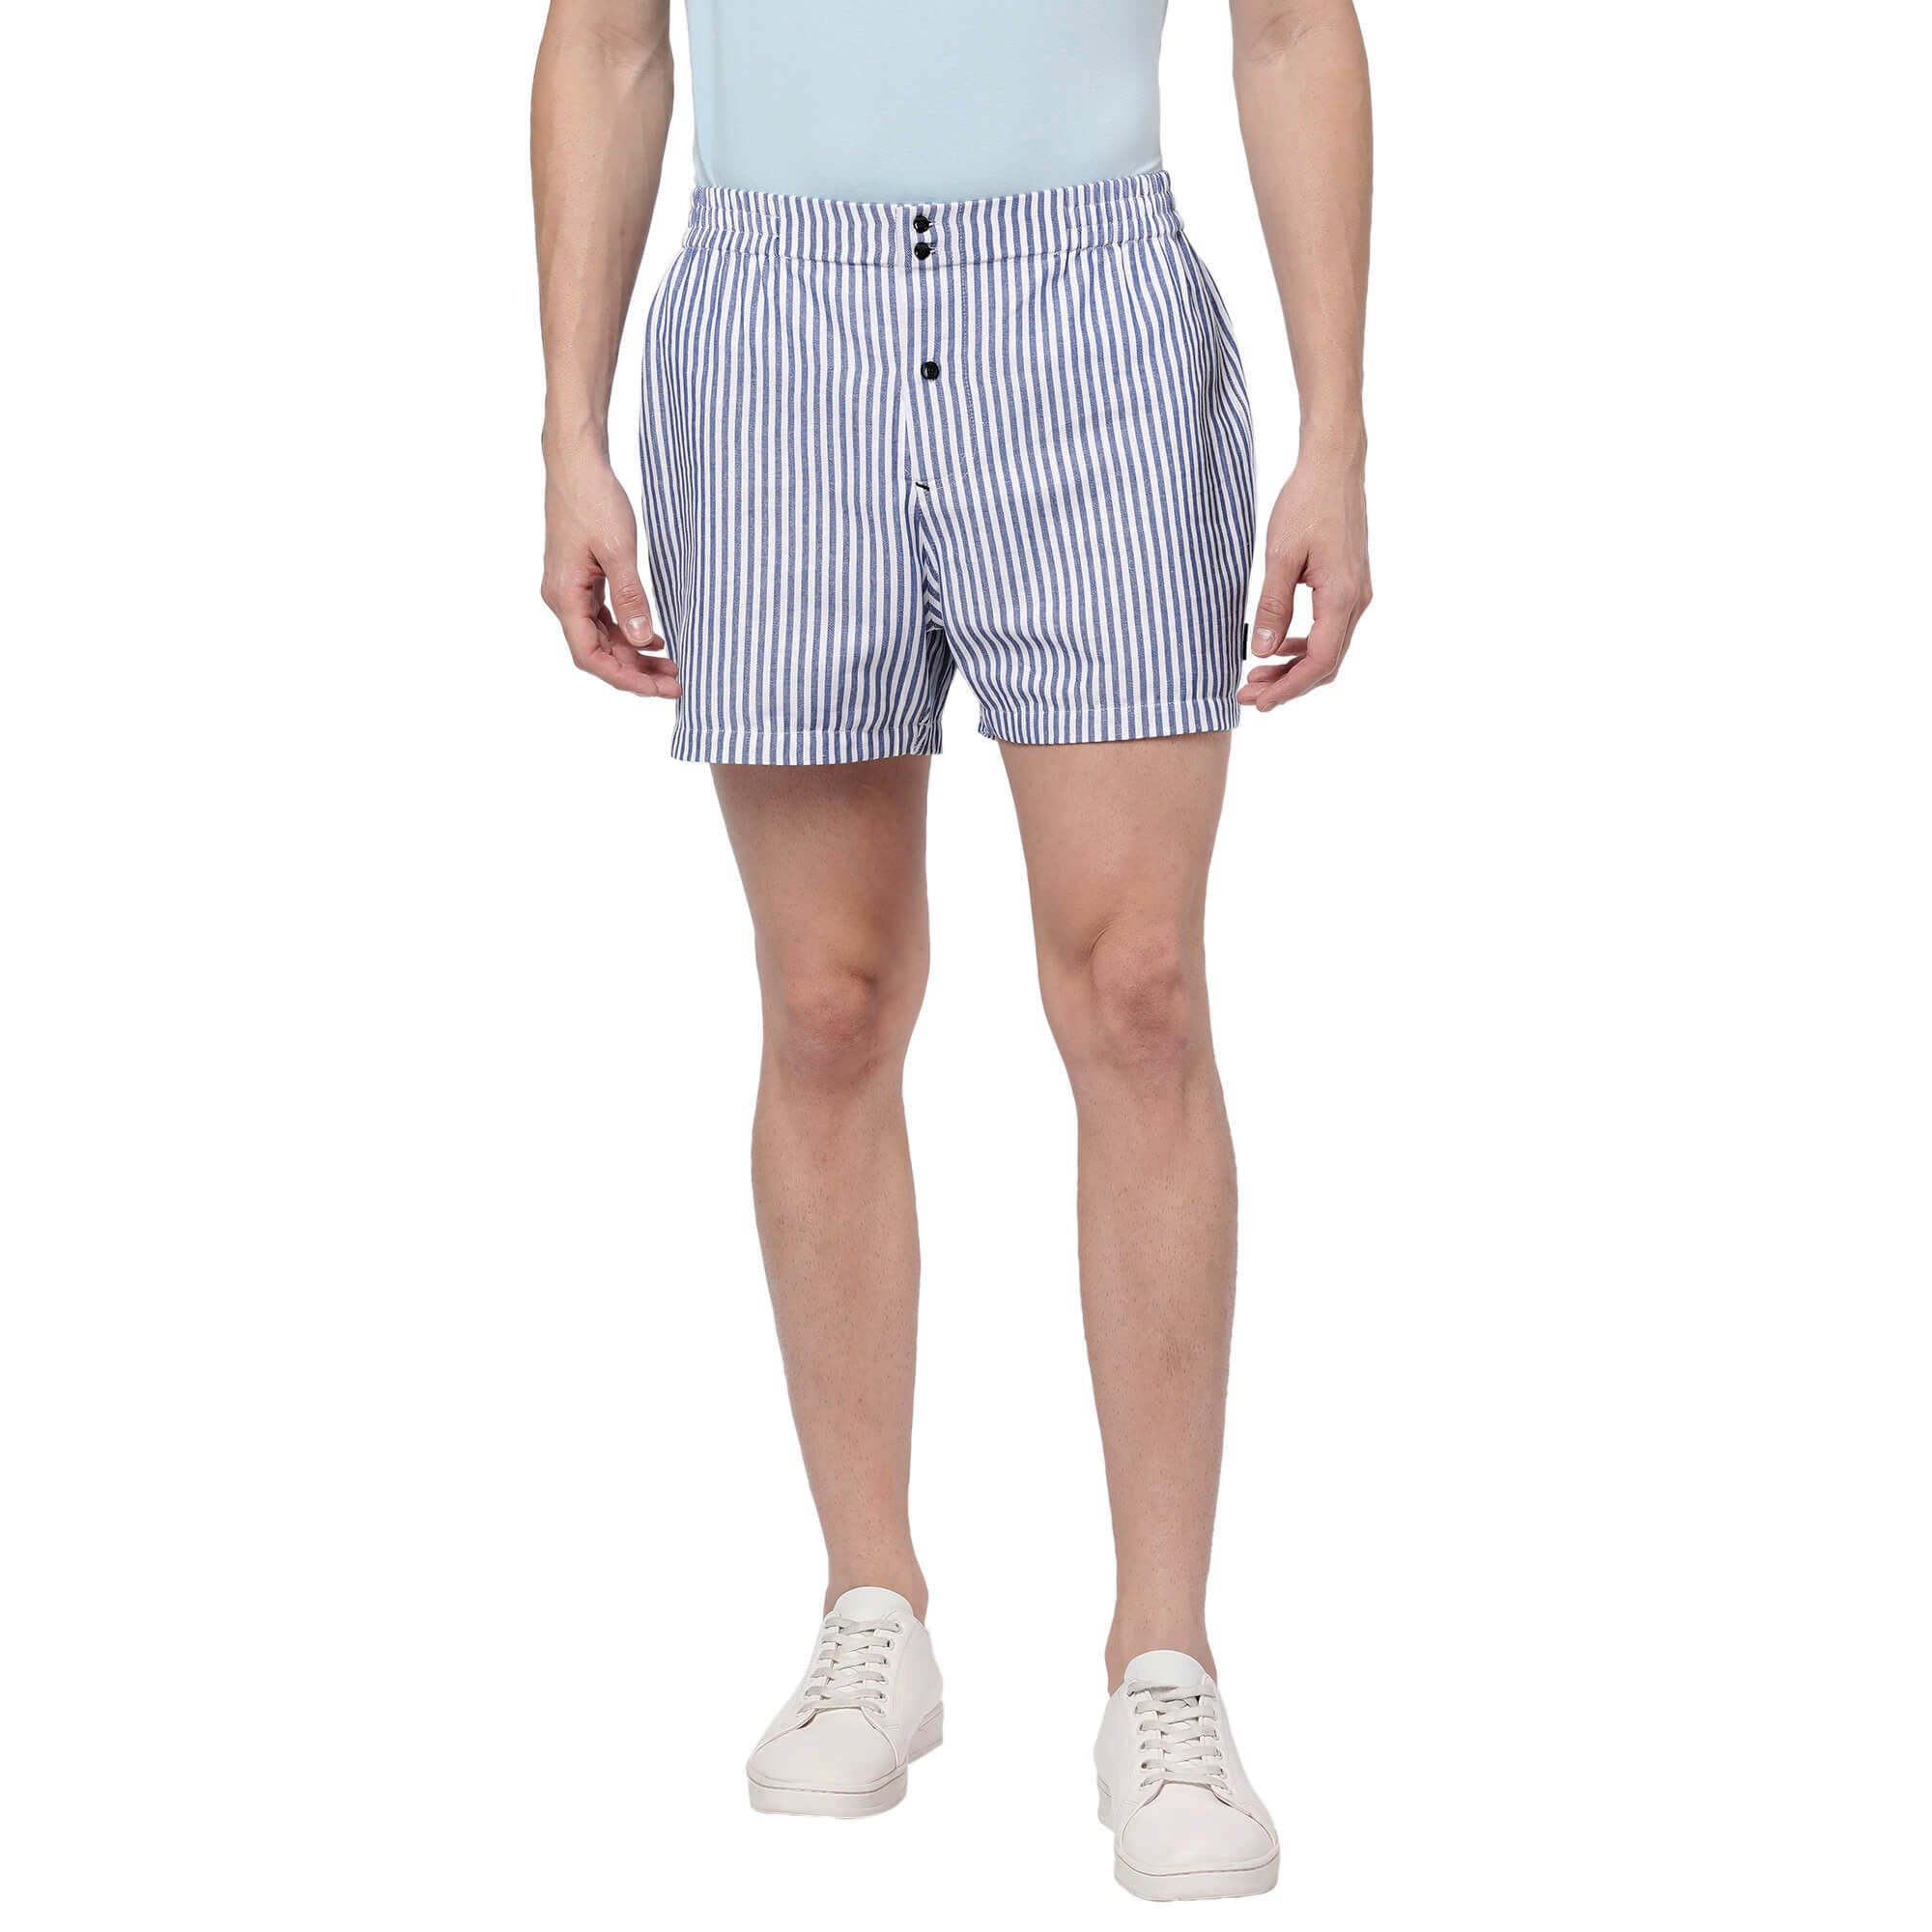 Vertical Stripe Shorts for Men